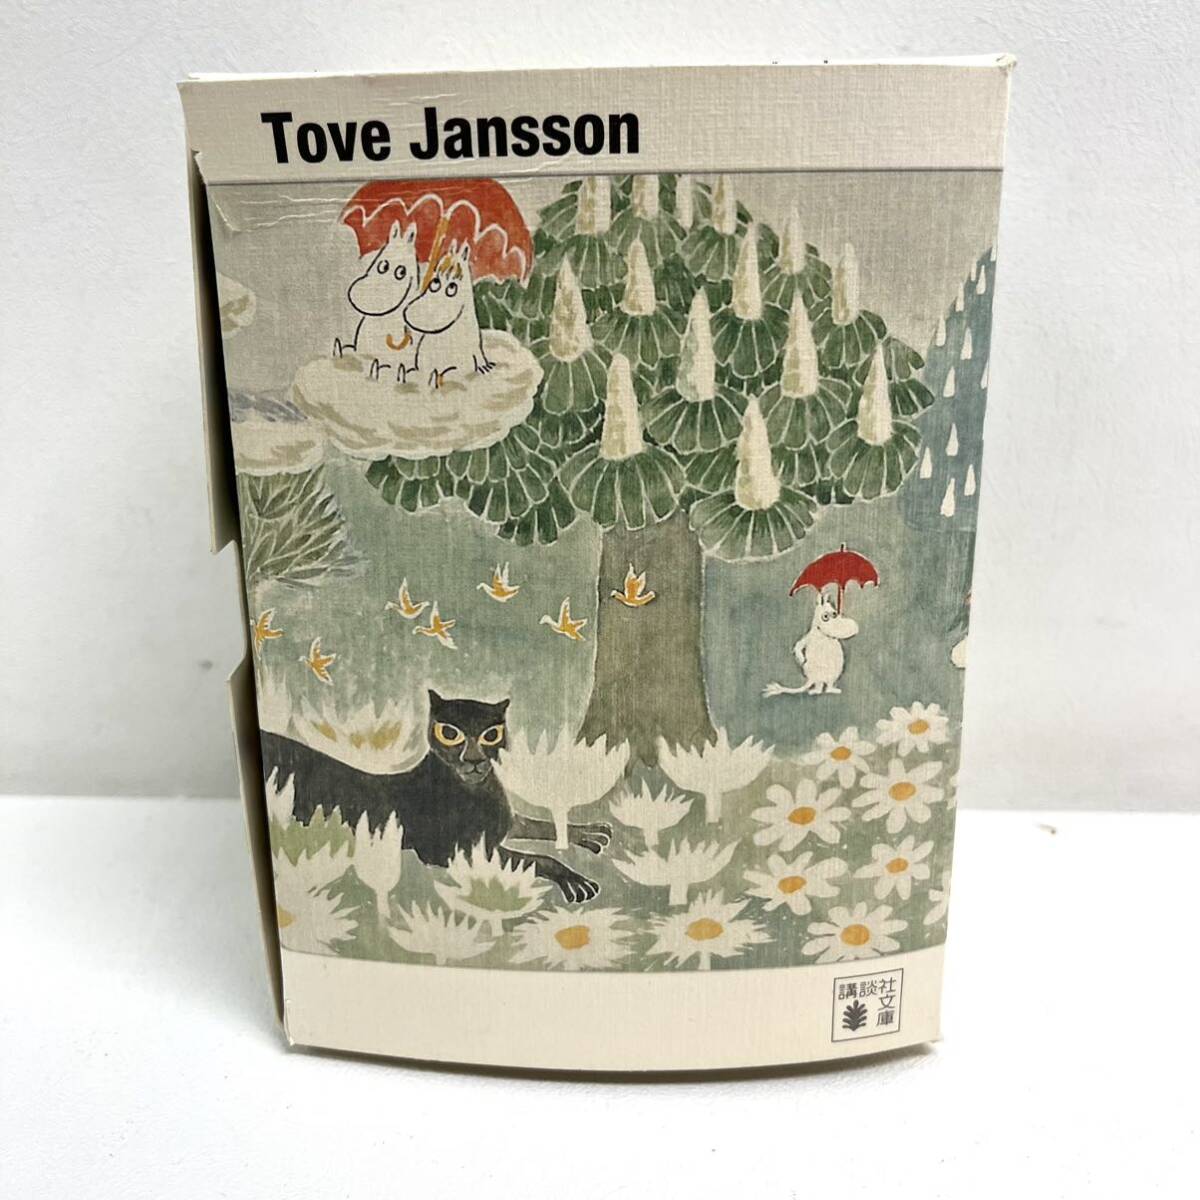 0420D6 Tove Jansson トーベ・ヤンソン Moomin ムーミン 童話限定カバー版 9巻 BOXセット 講談社文庫 帯付き / KOMETEN KOMMER 他の画像7